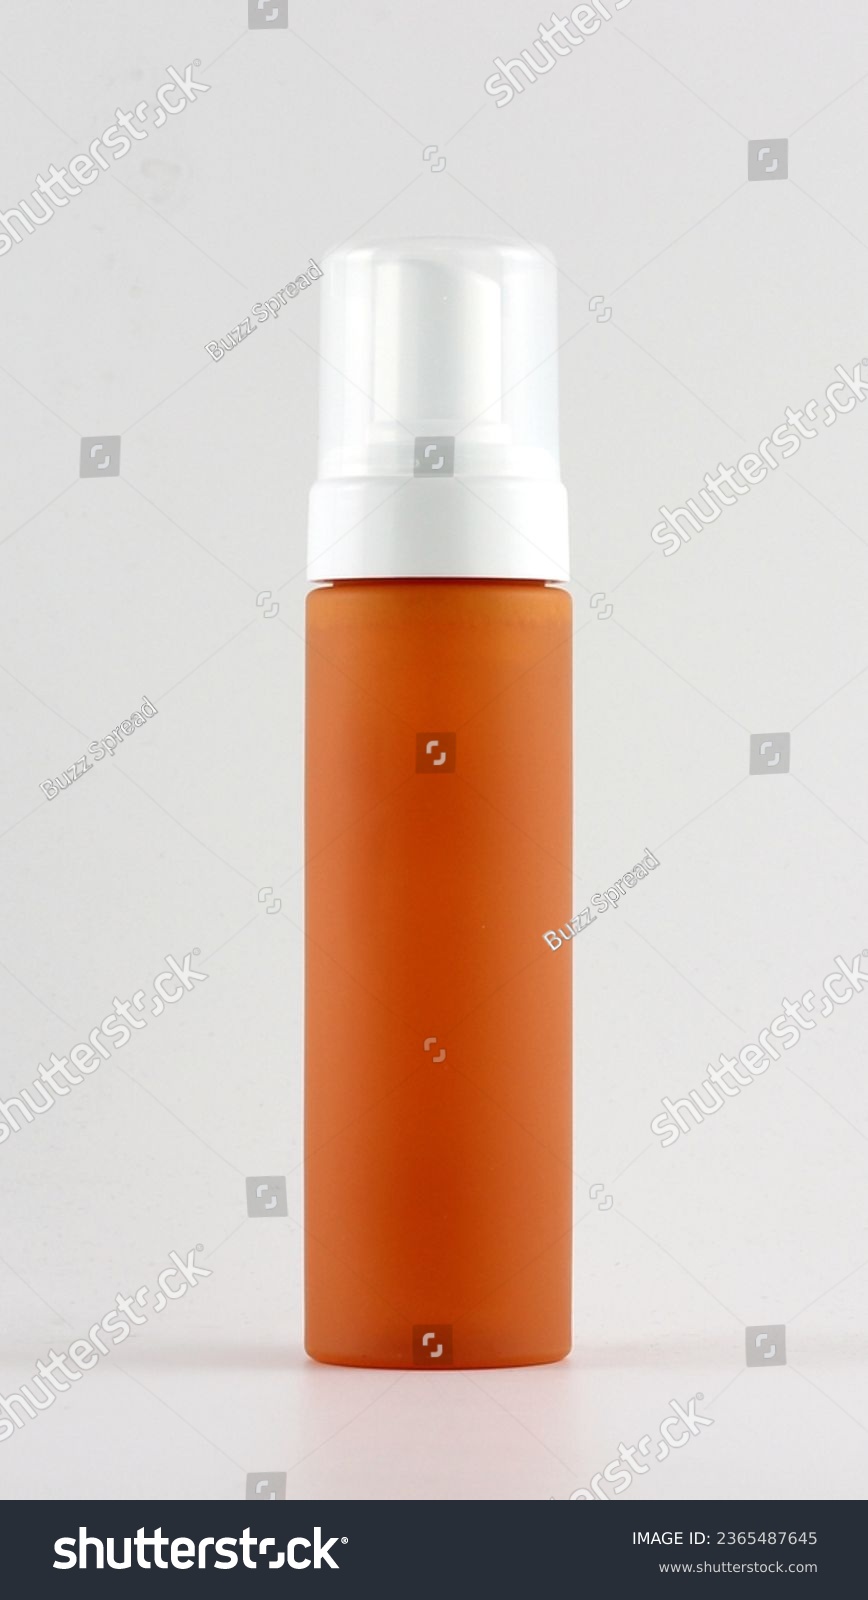 Orange Plastic Bottle In white background - Product Photography #2365487645